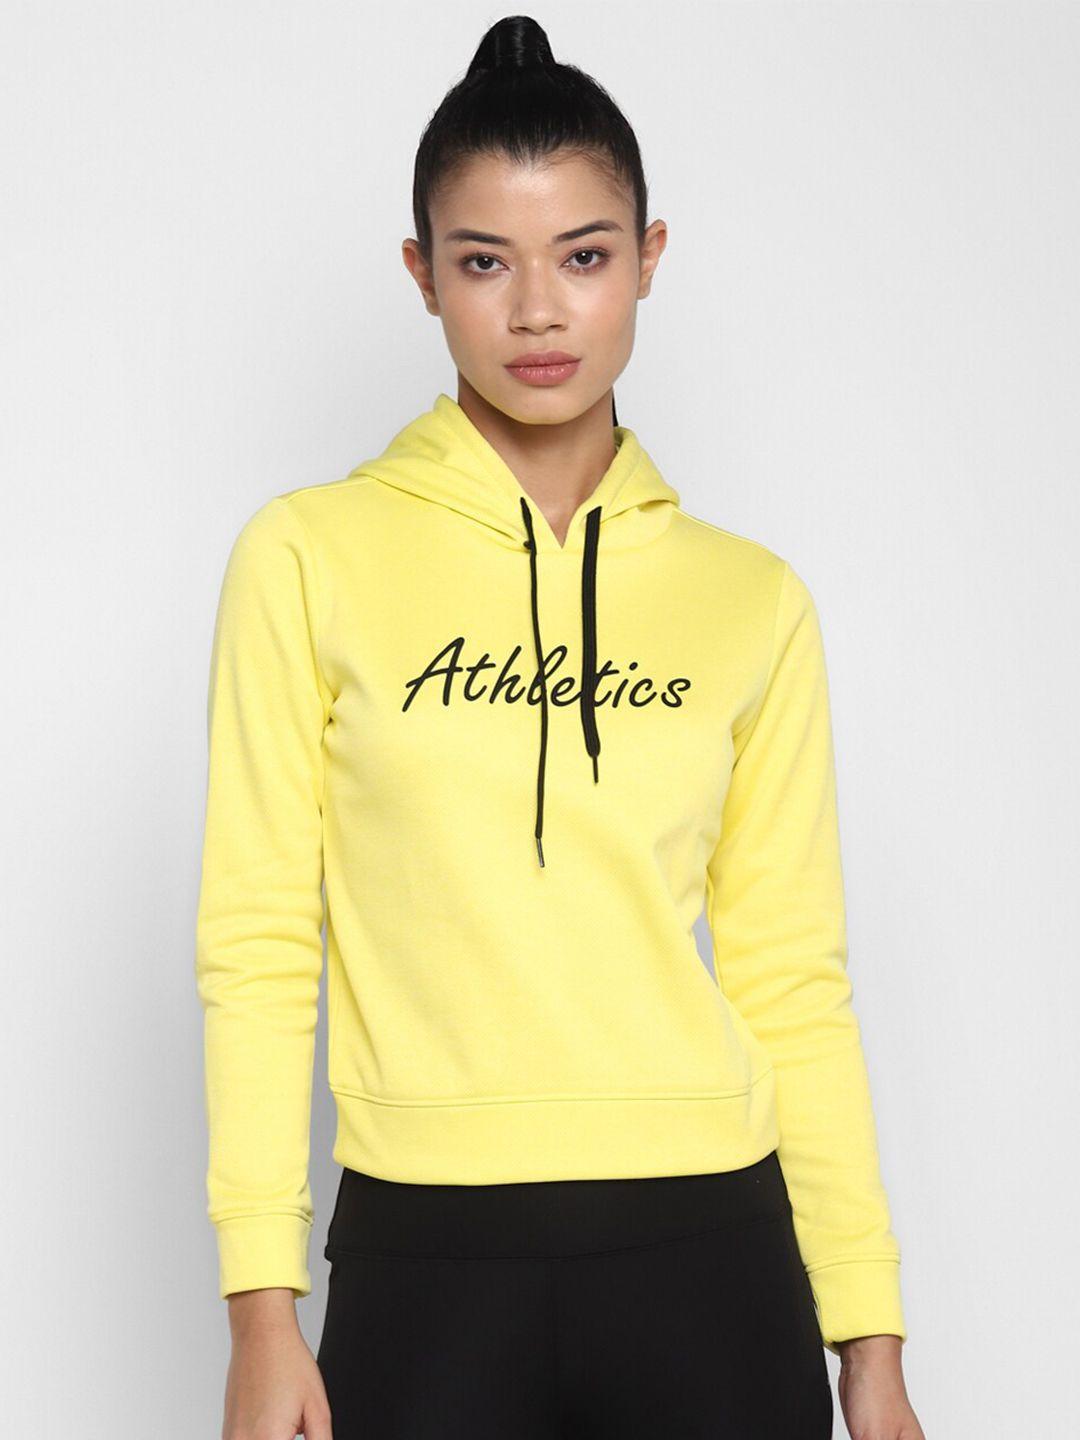 off limits women yellow hooded sweatshirt